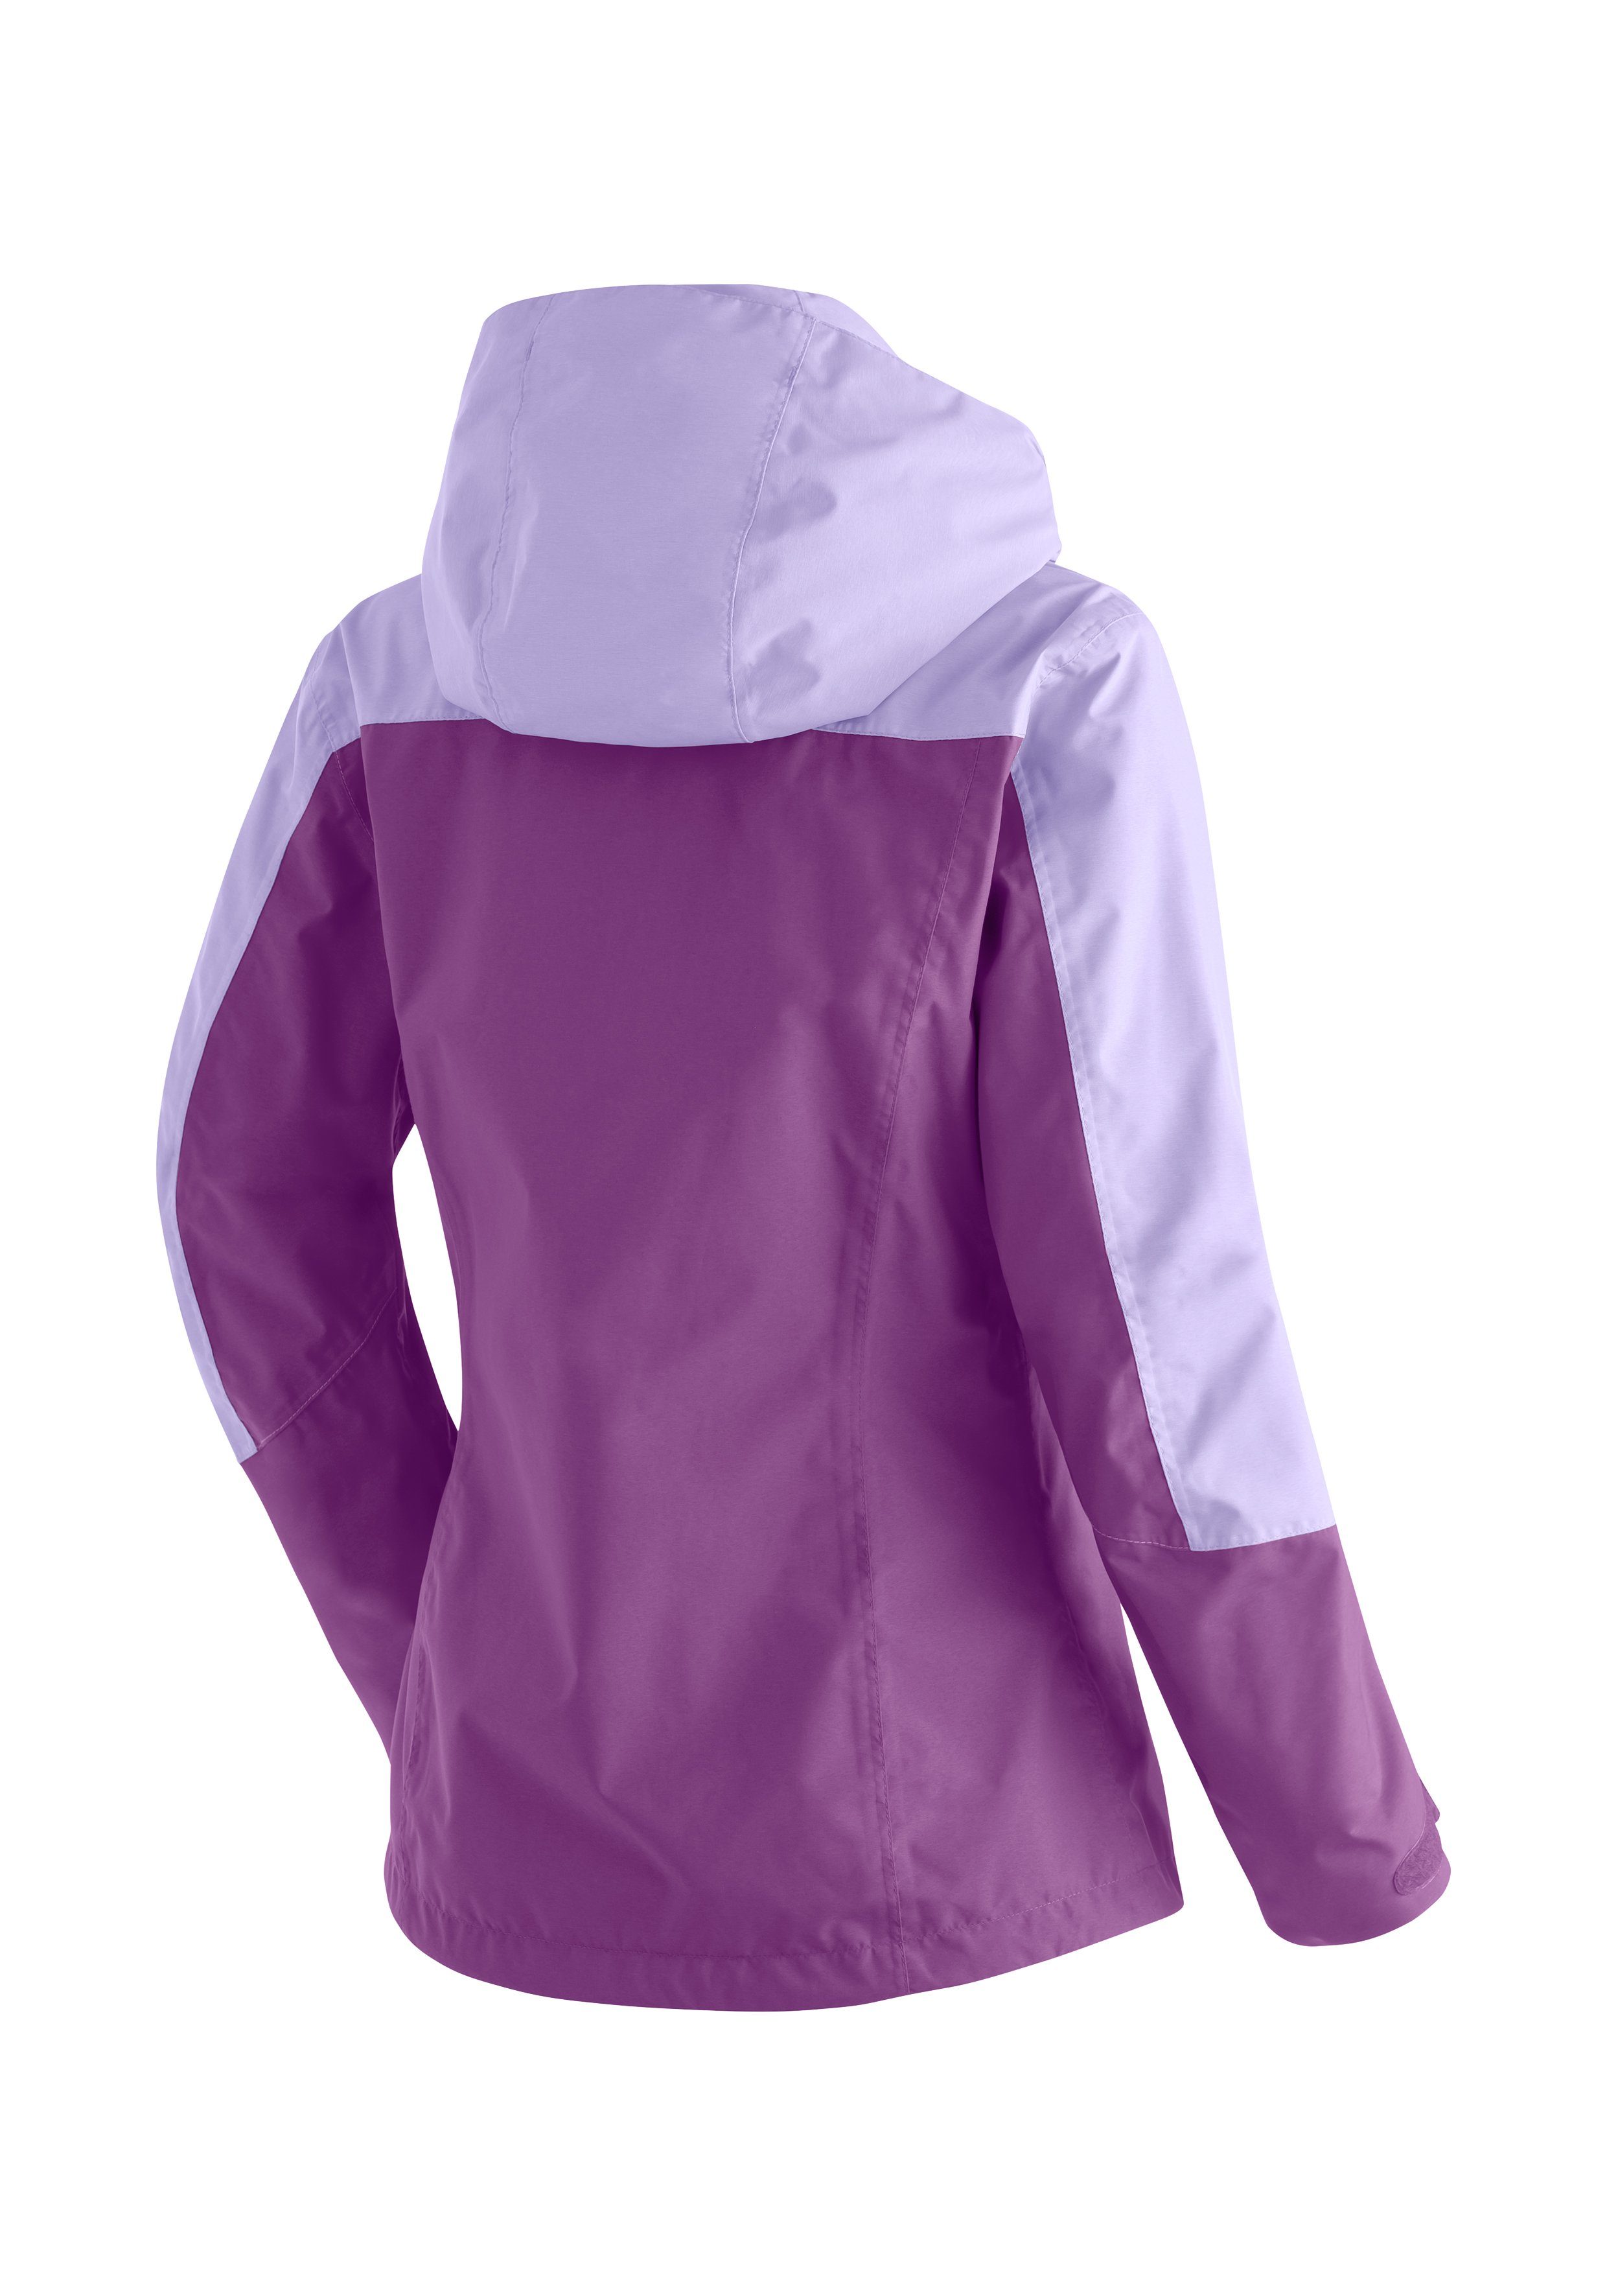 aus W Wasserdichte Outdoorjacke Funktionsjacke purpurviolett Sports Partu Material Maier atmungsaktivem